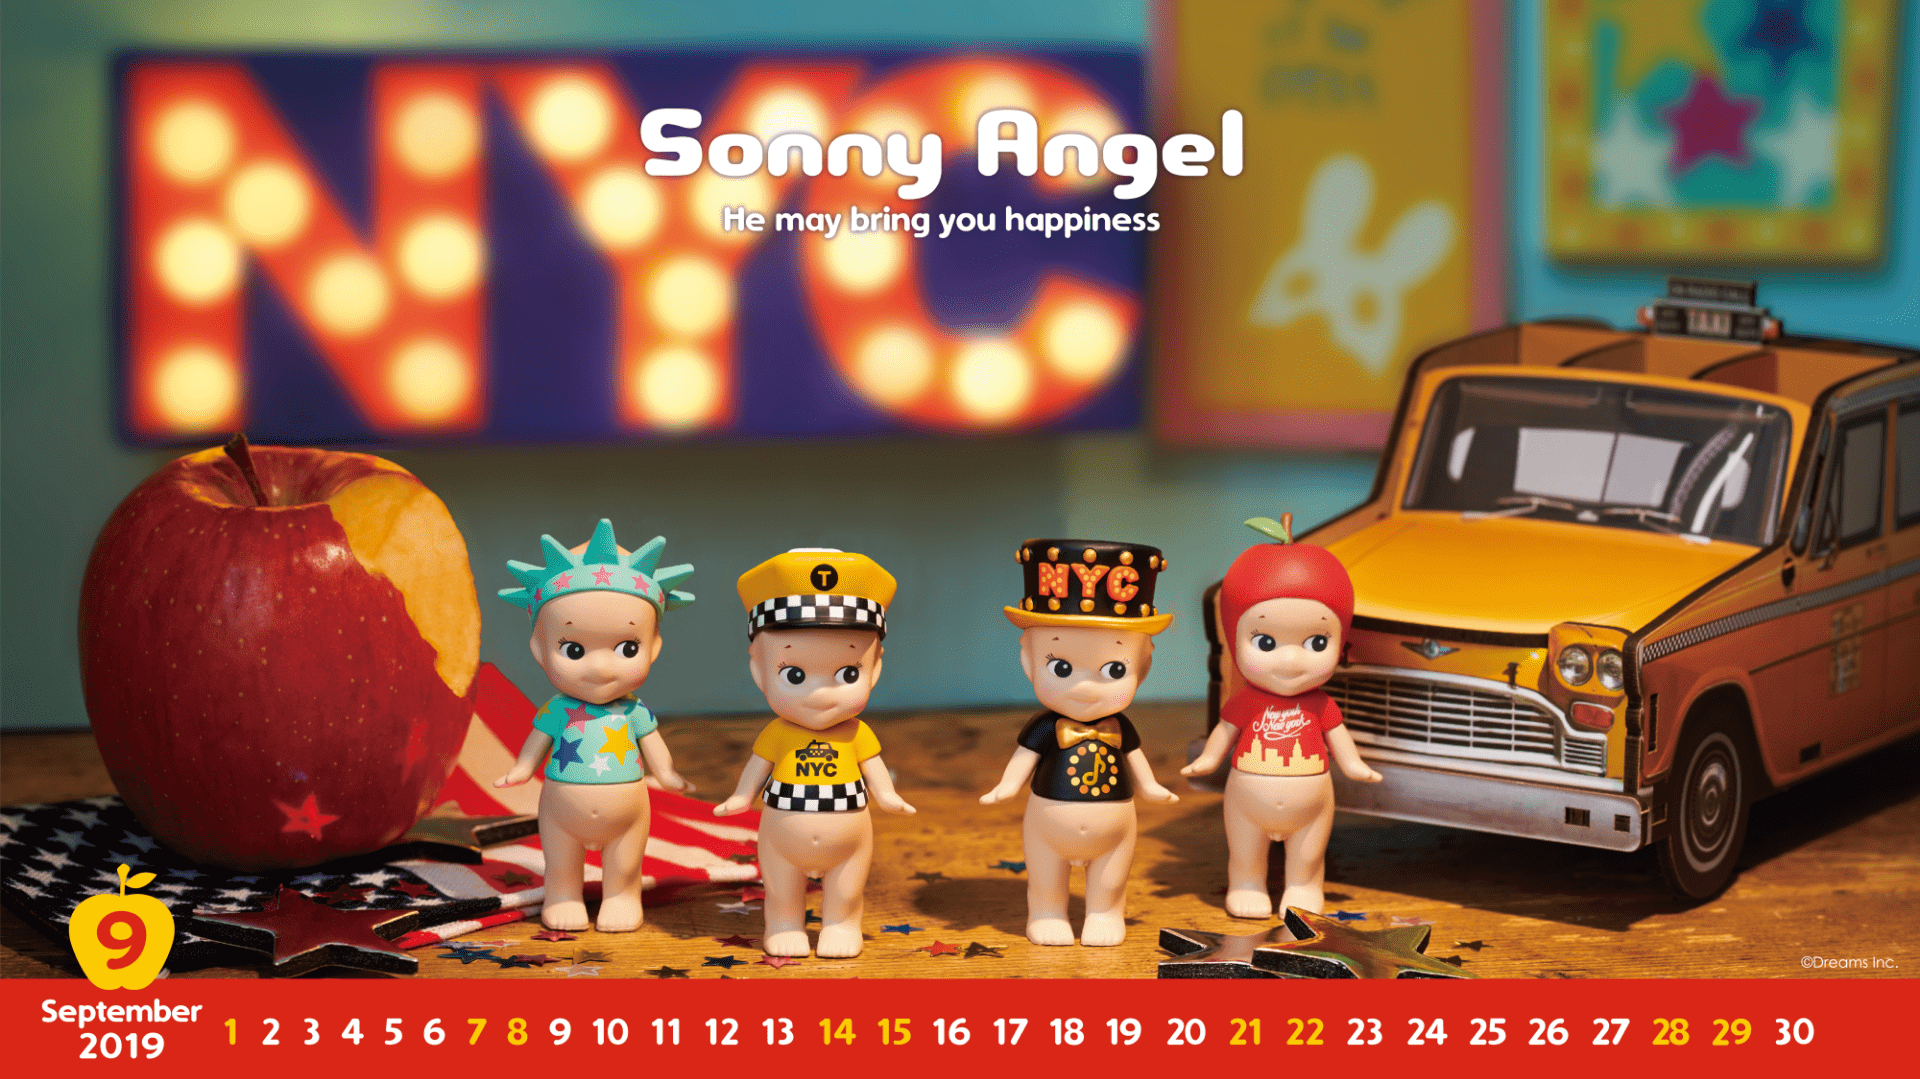 Sonny Angel Original Online Calendar Store